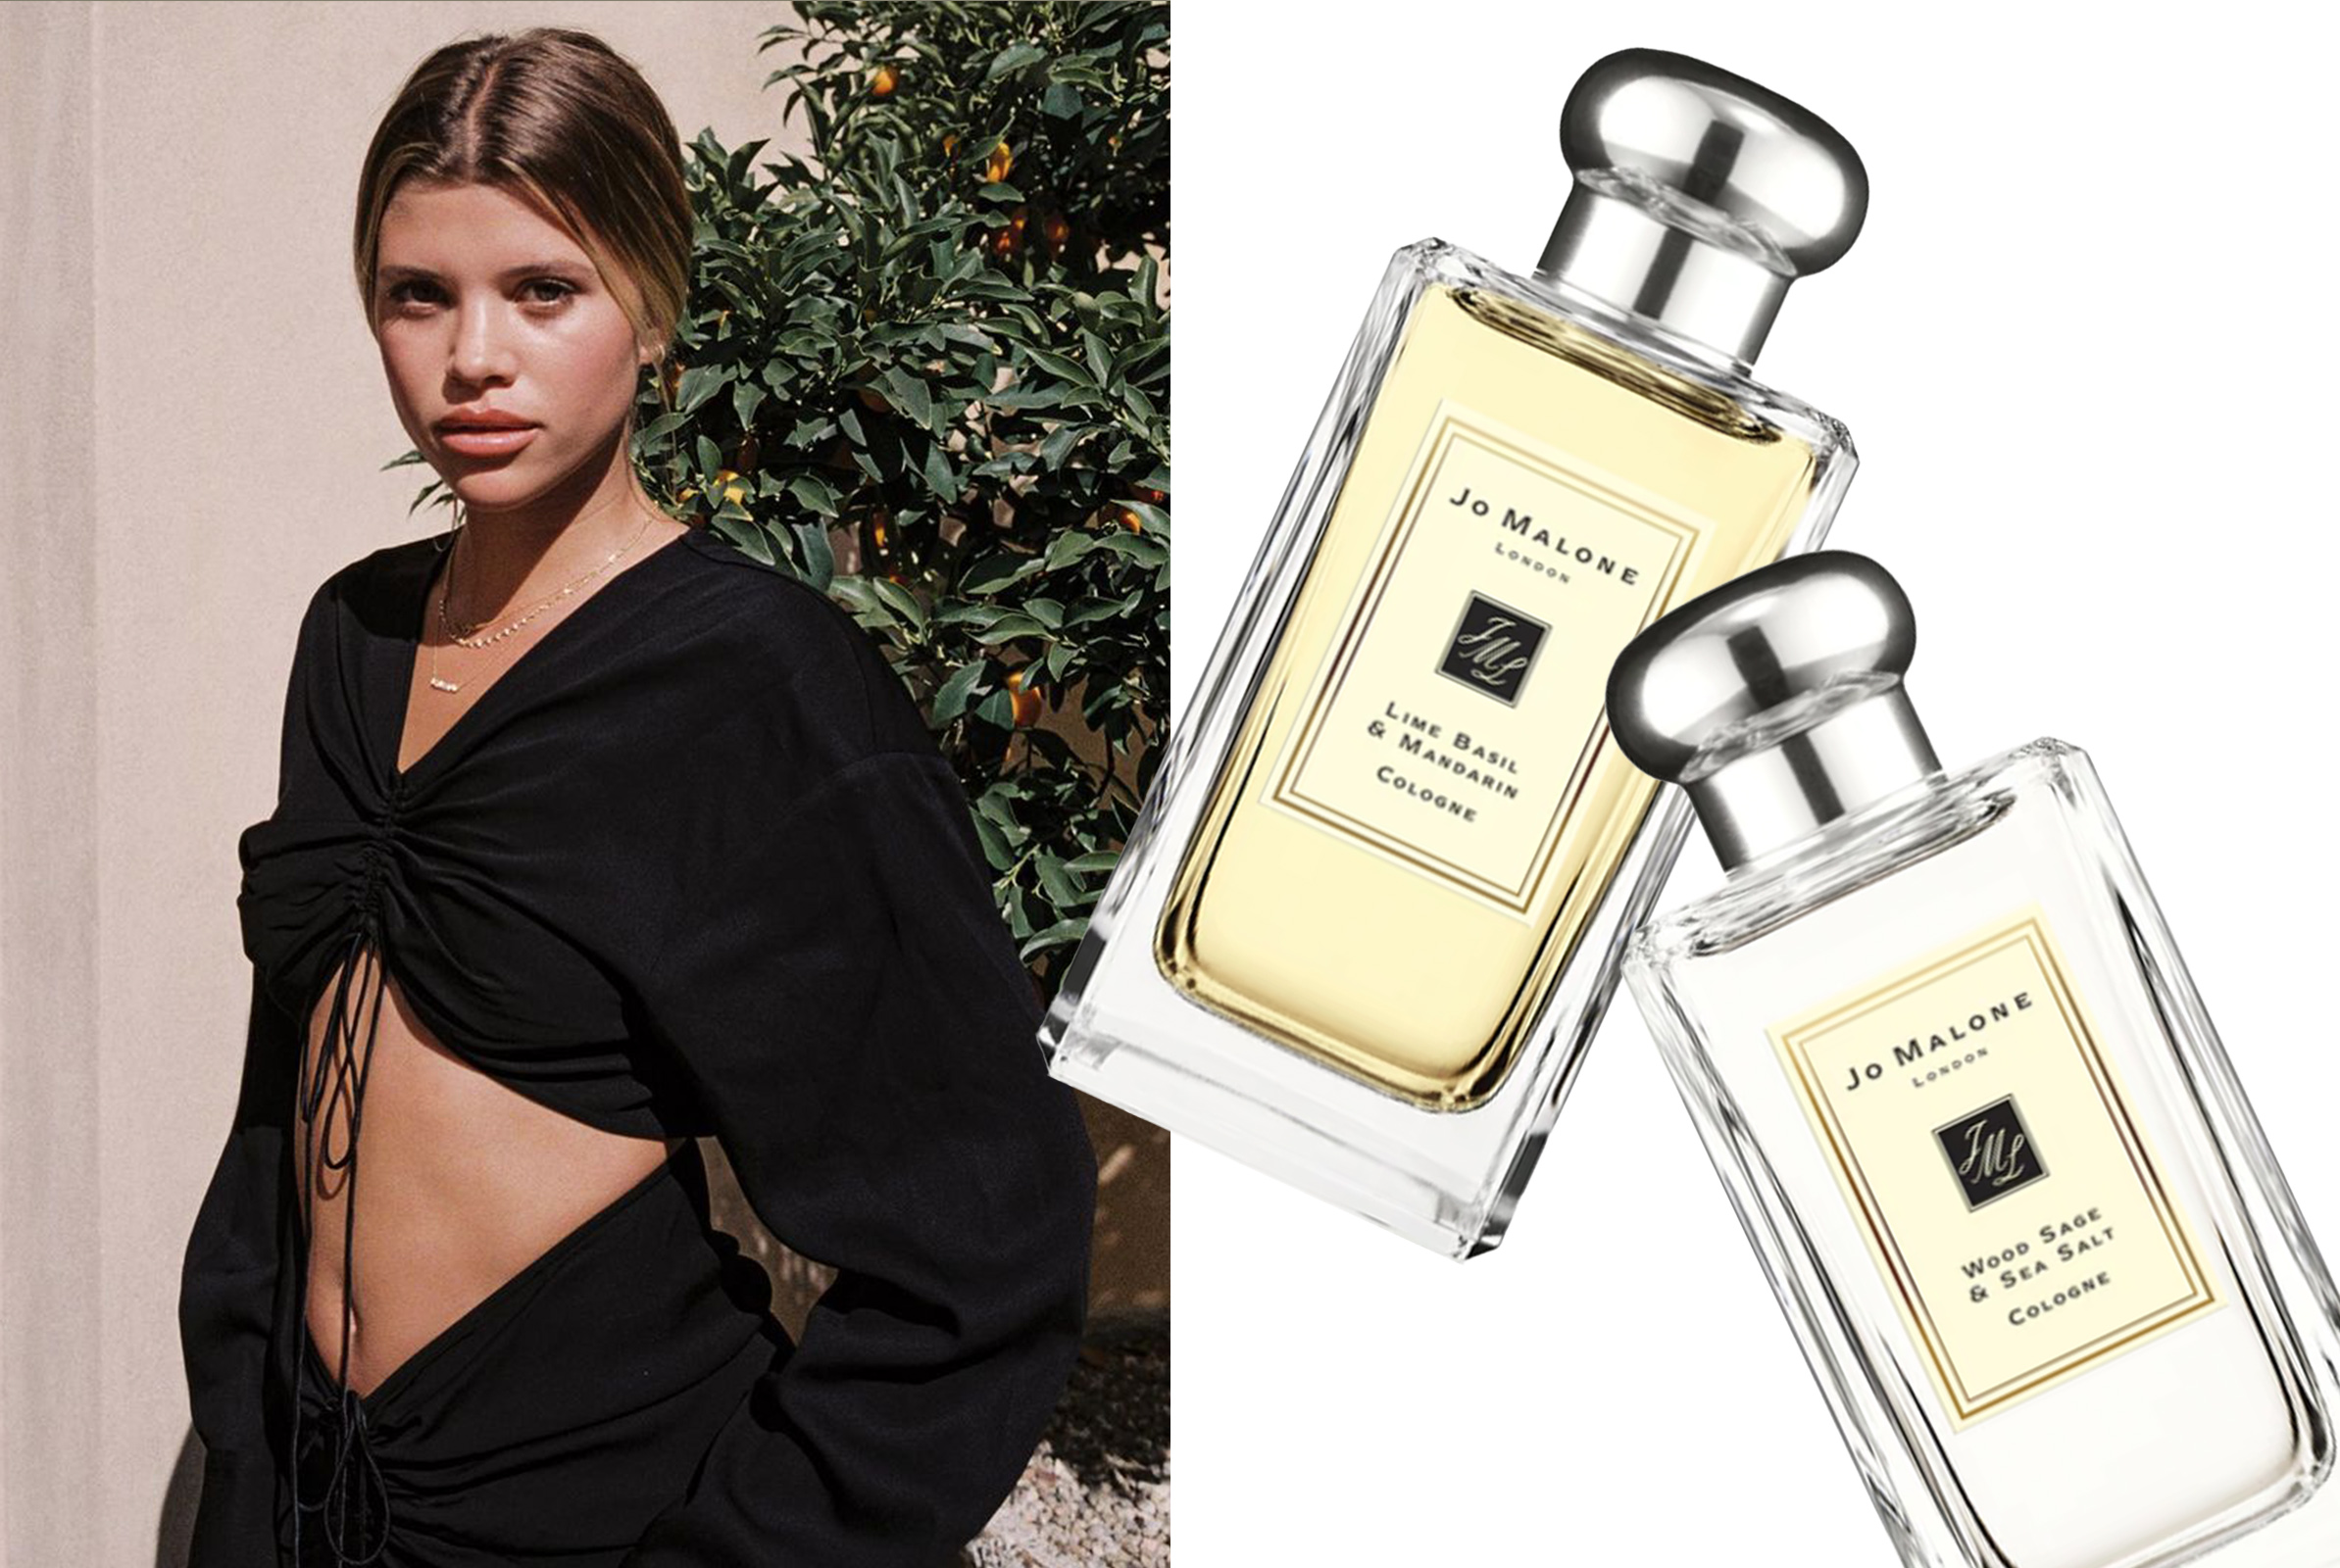 Louis Vuitton introduces the new feminine fragrance Coeur Battant